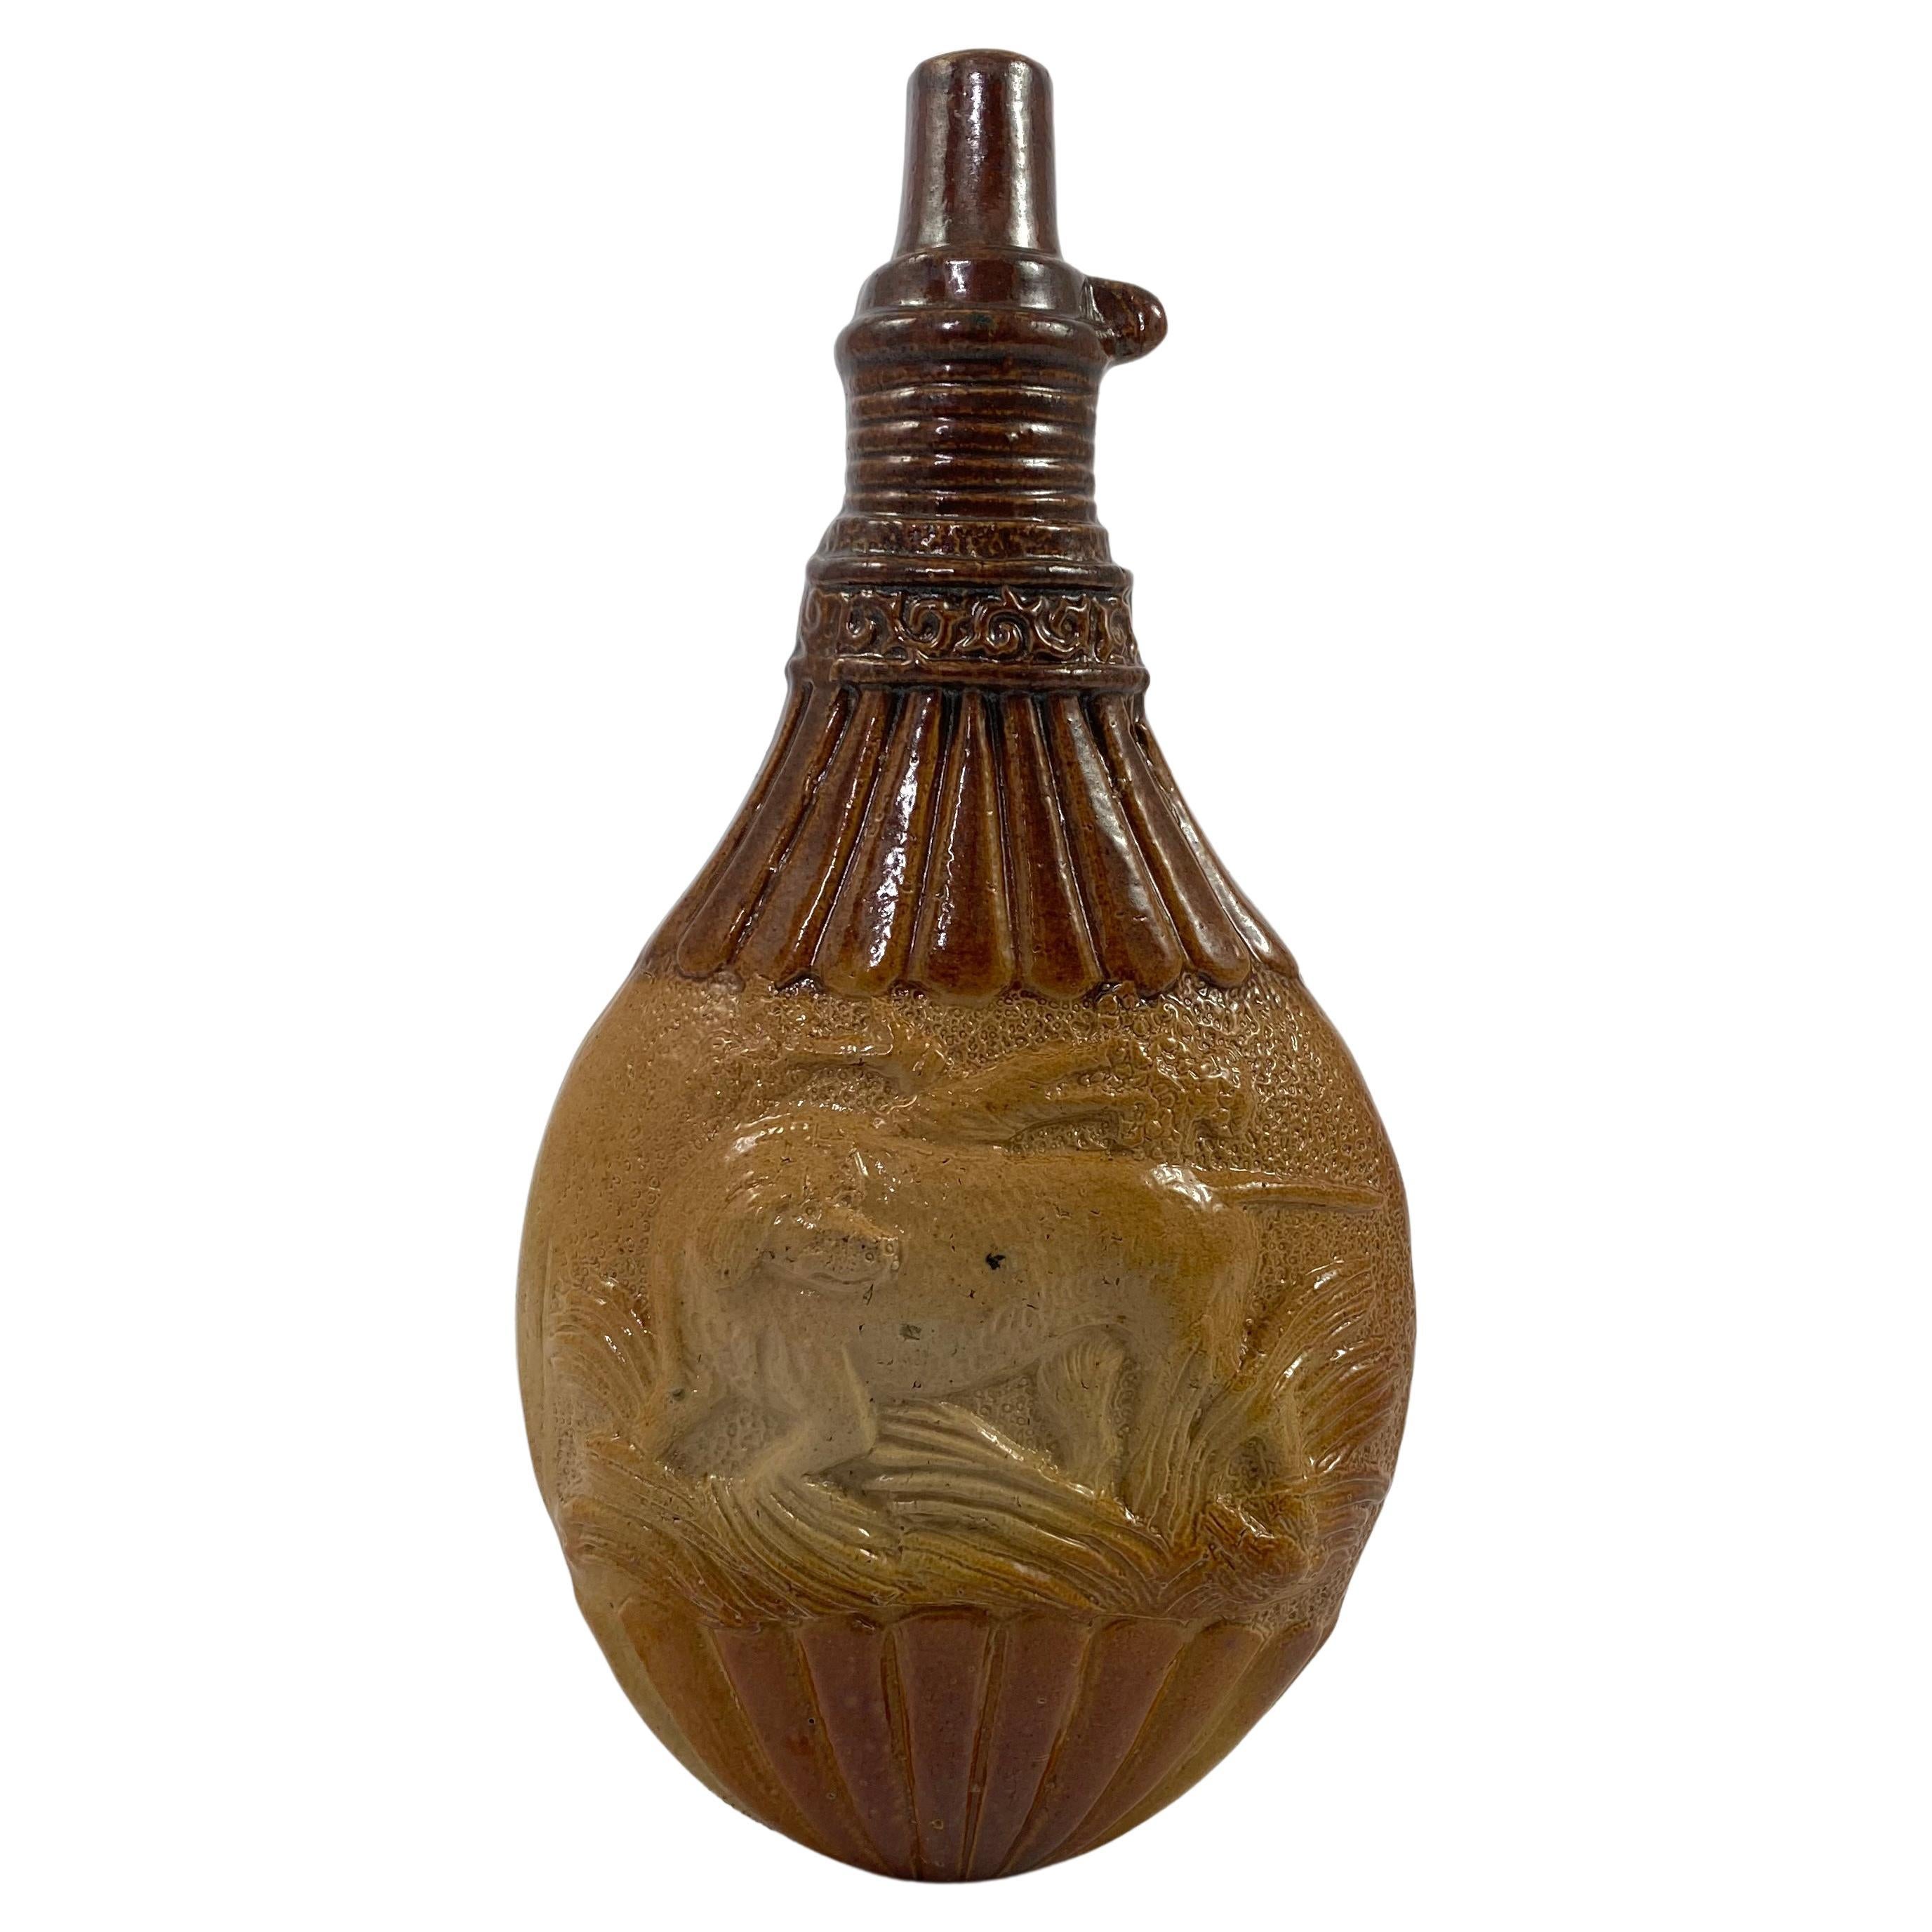 Lambeth Saltglaze Spirit Flask, c. 1840